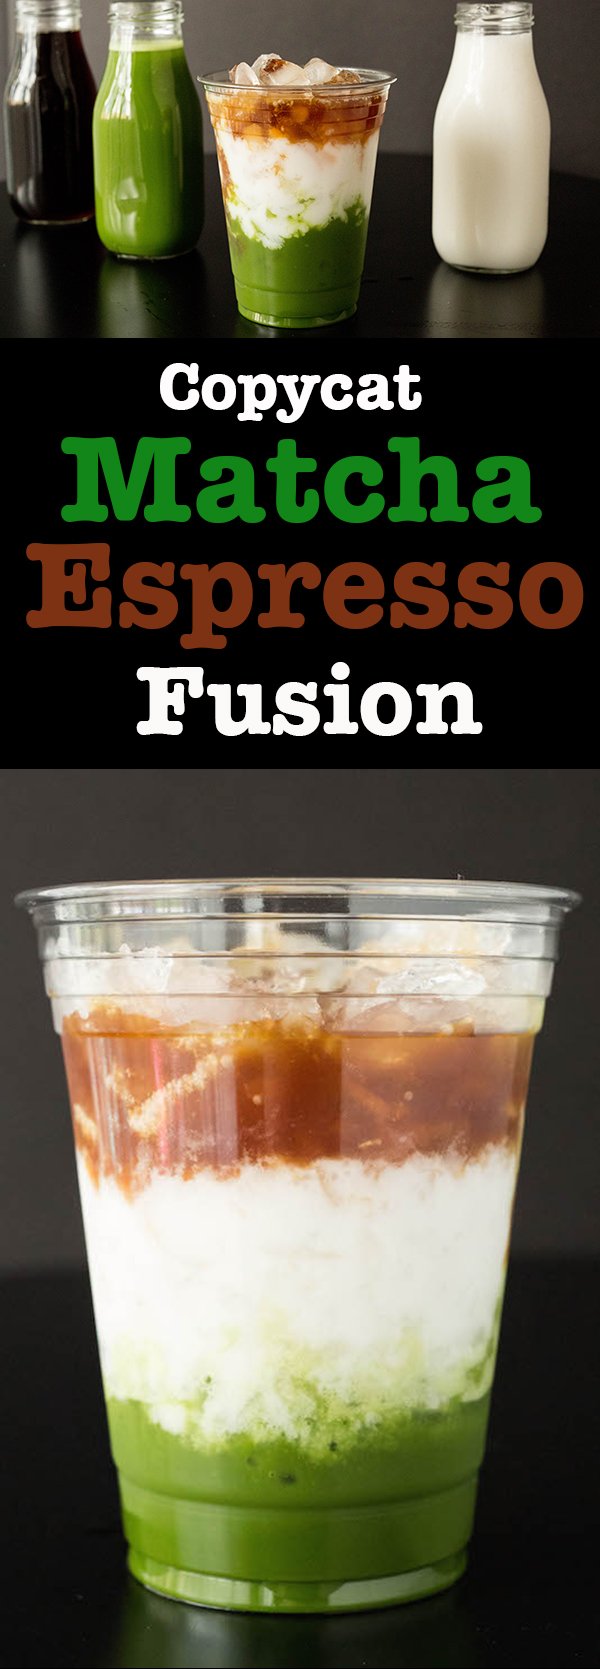 How to make a Copycat Starbucks Matcha Espresso Fusion layered drink